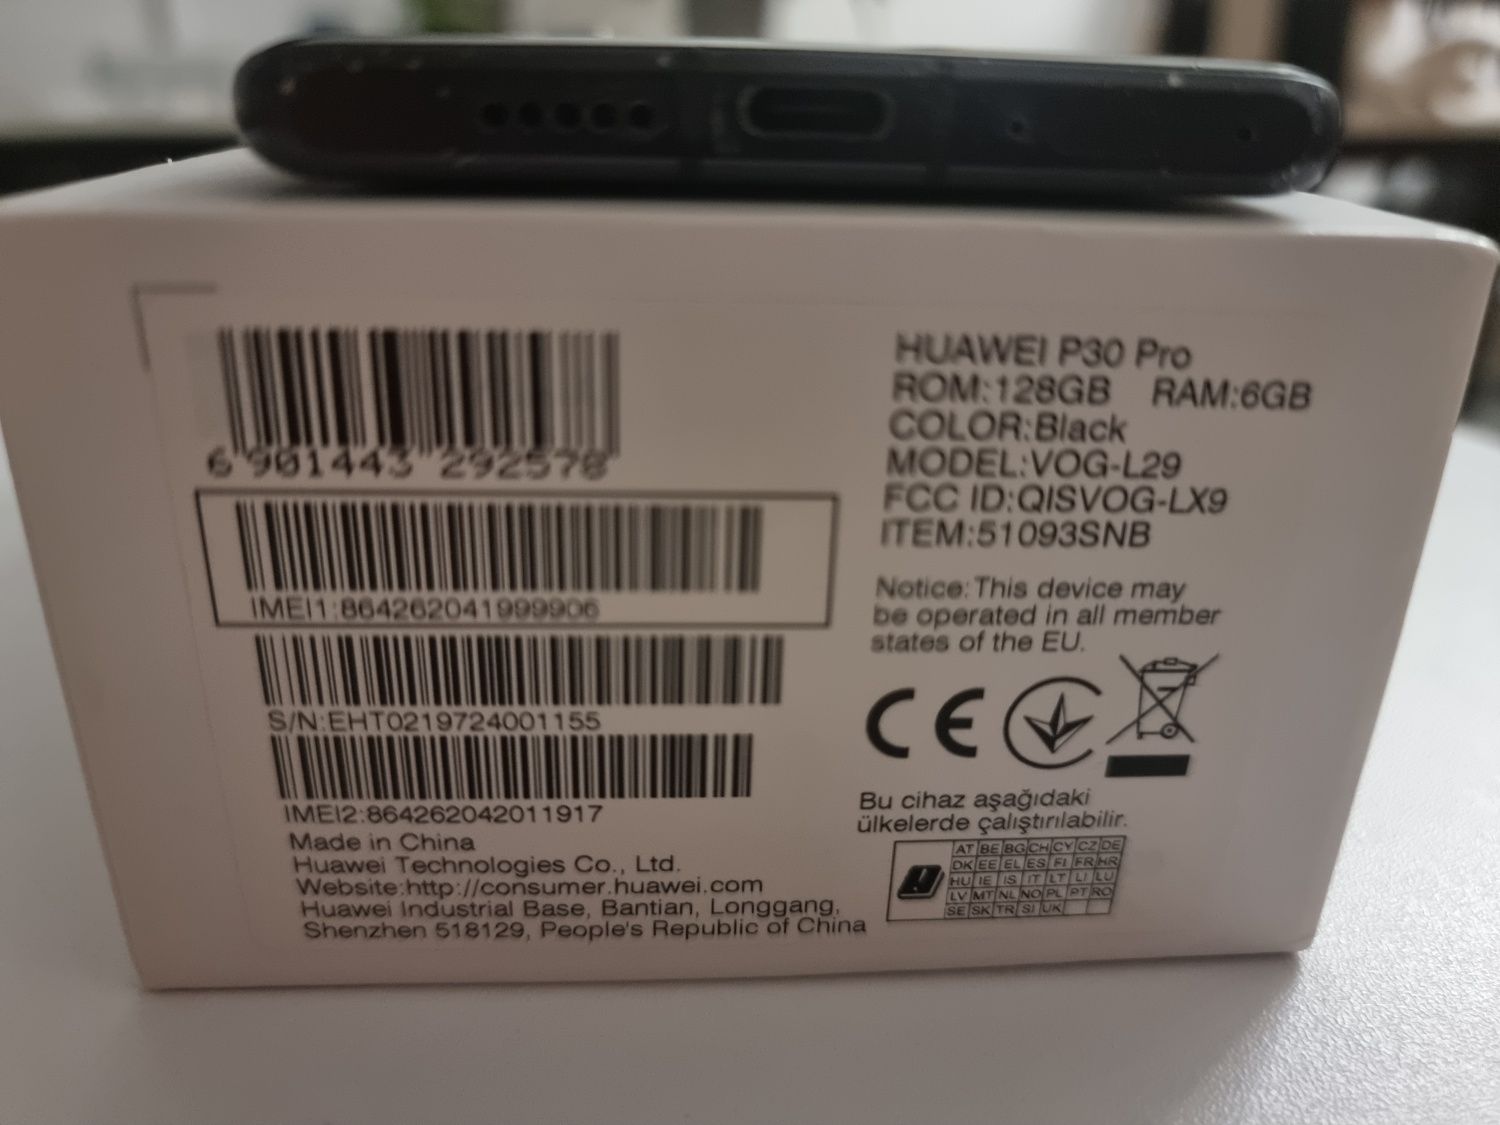 Huawei P30 Pro 6/128